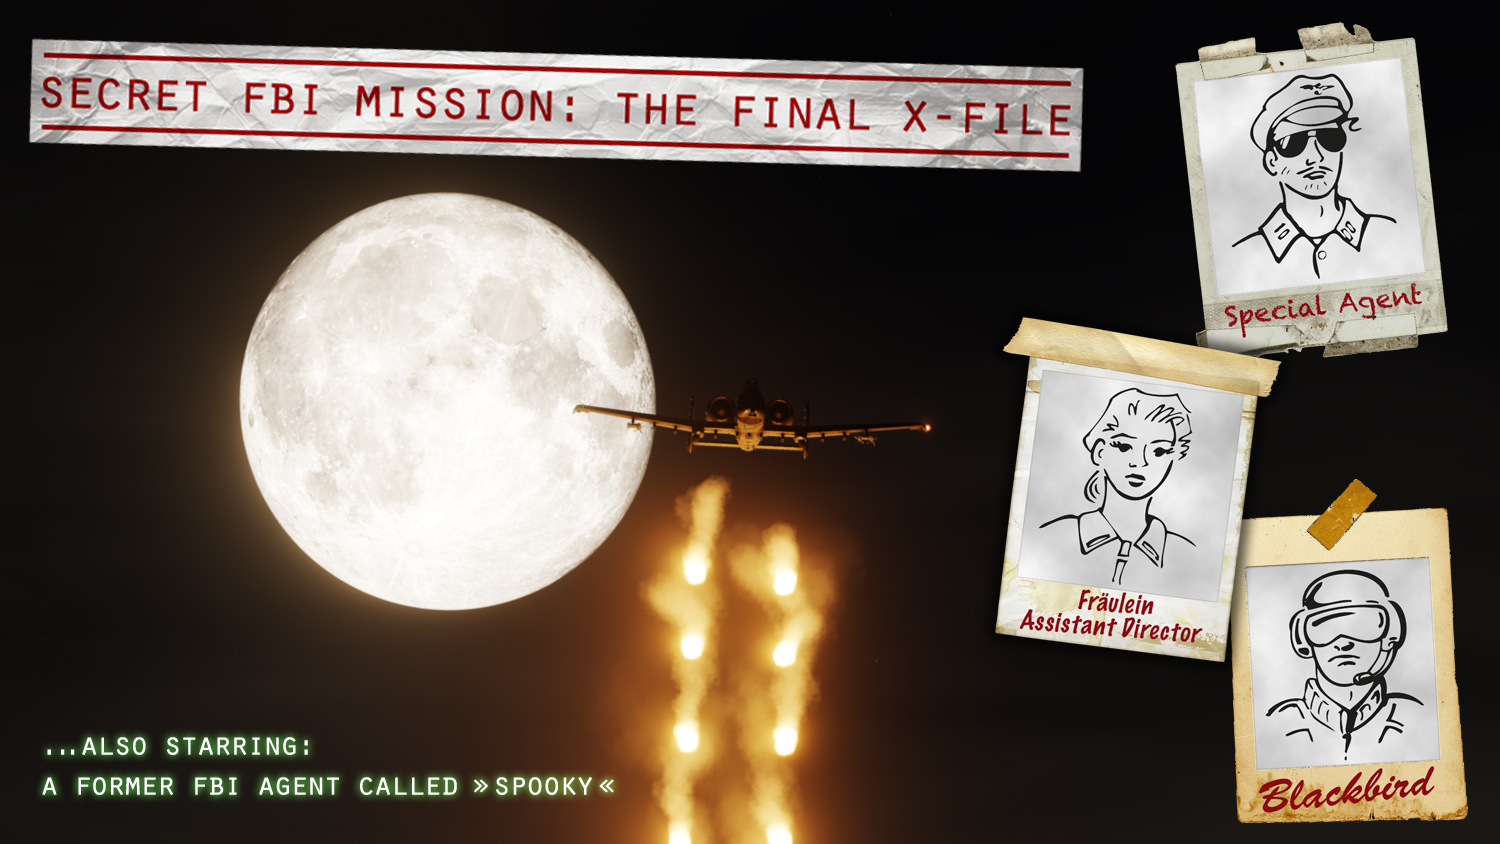 A-10C - Secret FBI Mission: The Final X-File